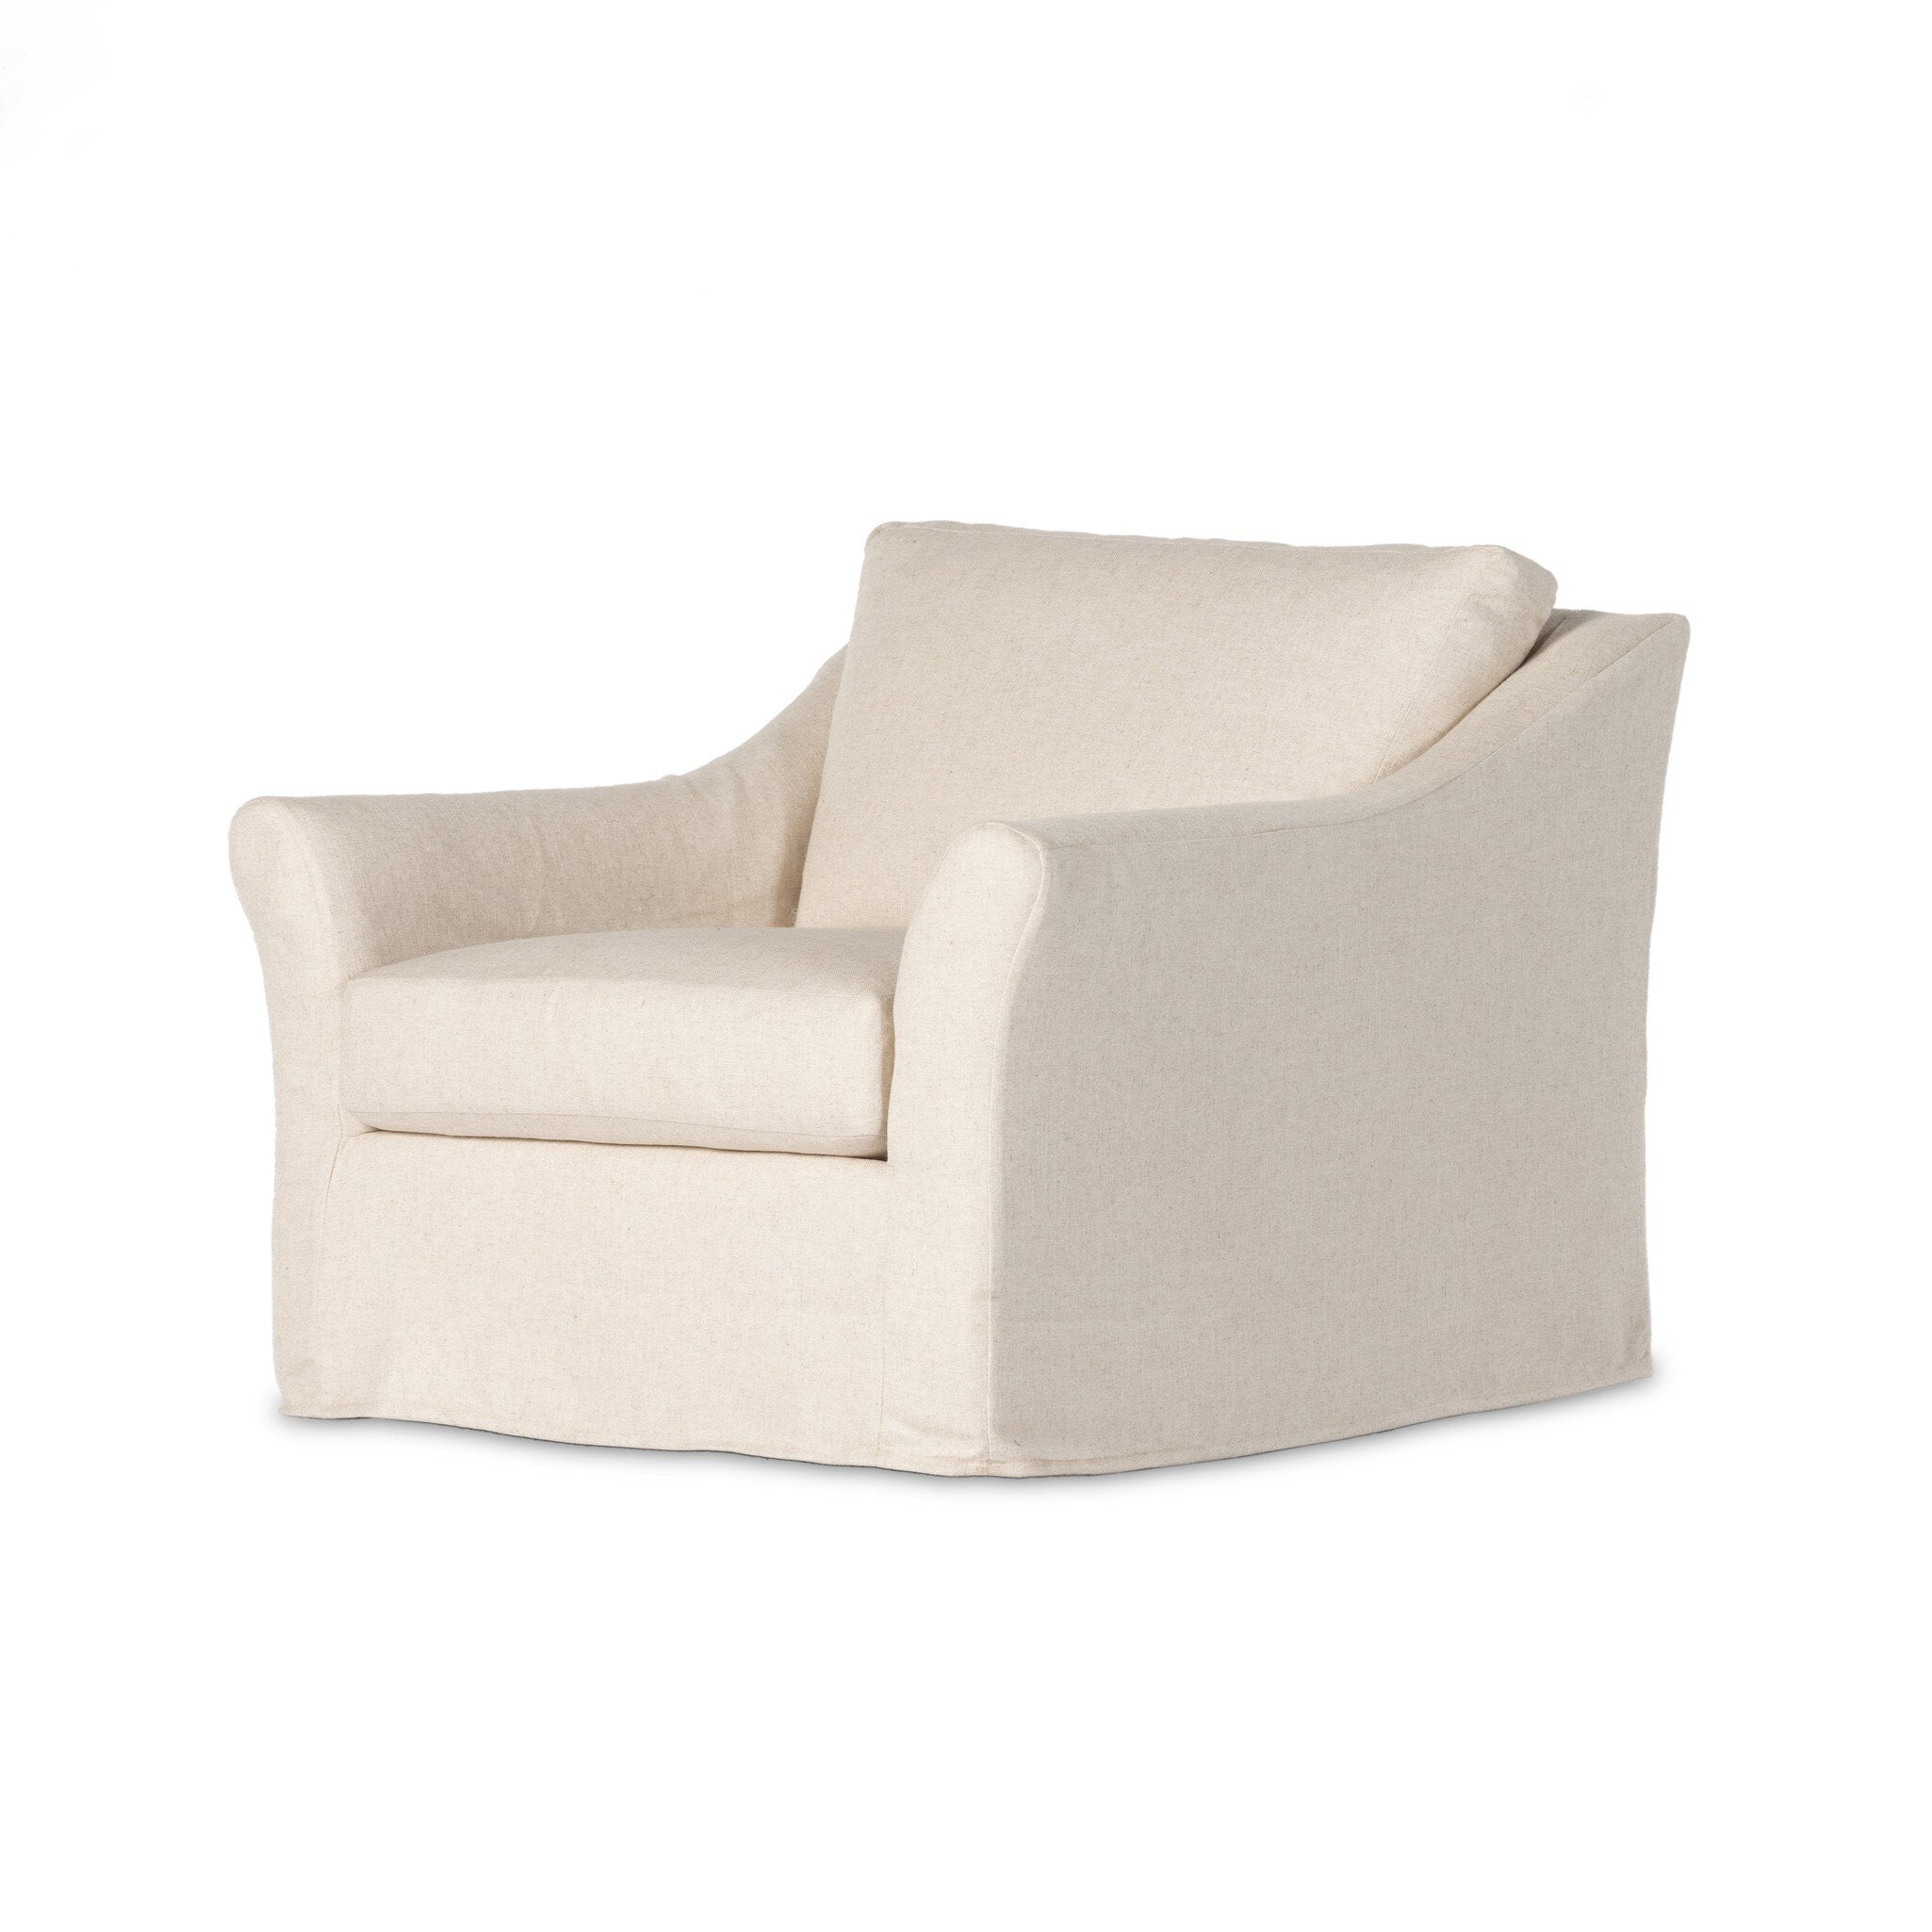 Delray Slipcover Swivel Chair - Evere Creme